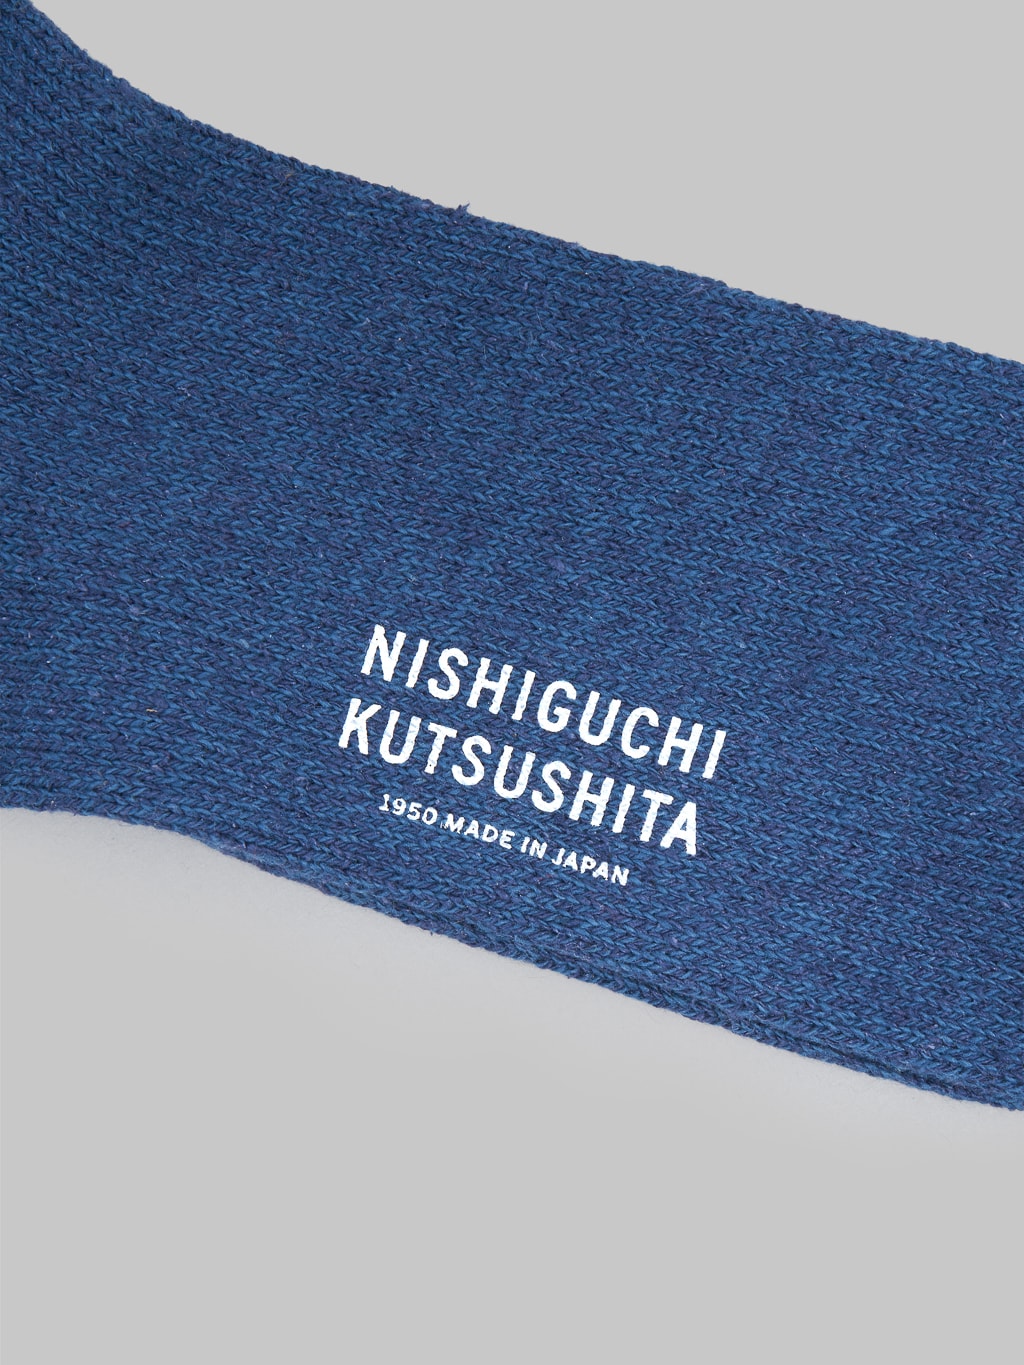 Nishiguchi Kutsushita Silk Cotton Socks Navy Brand Logo